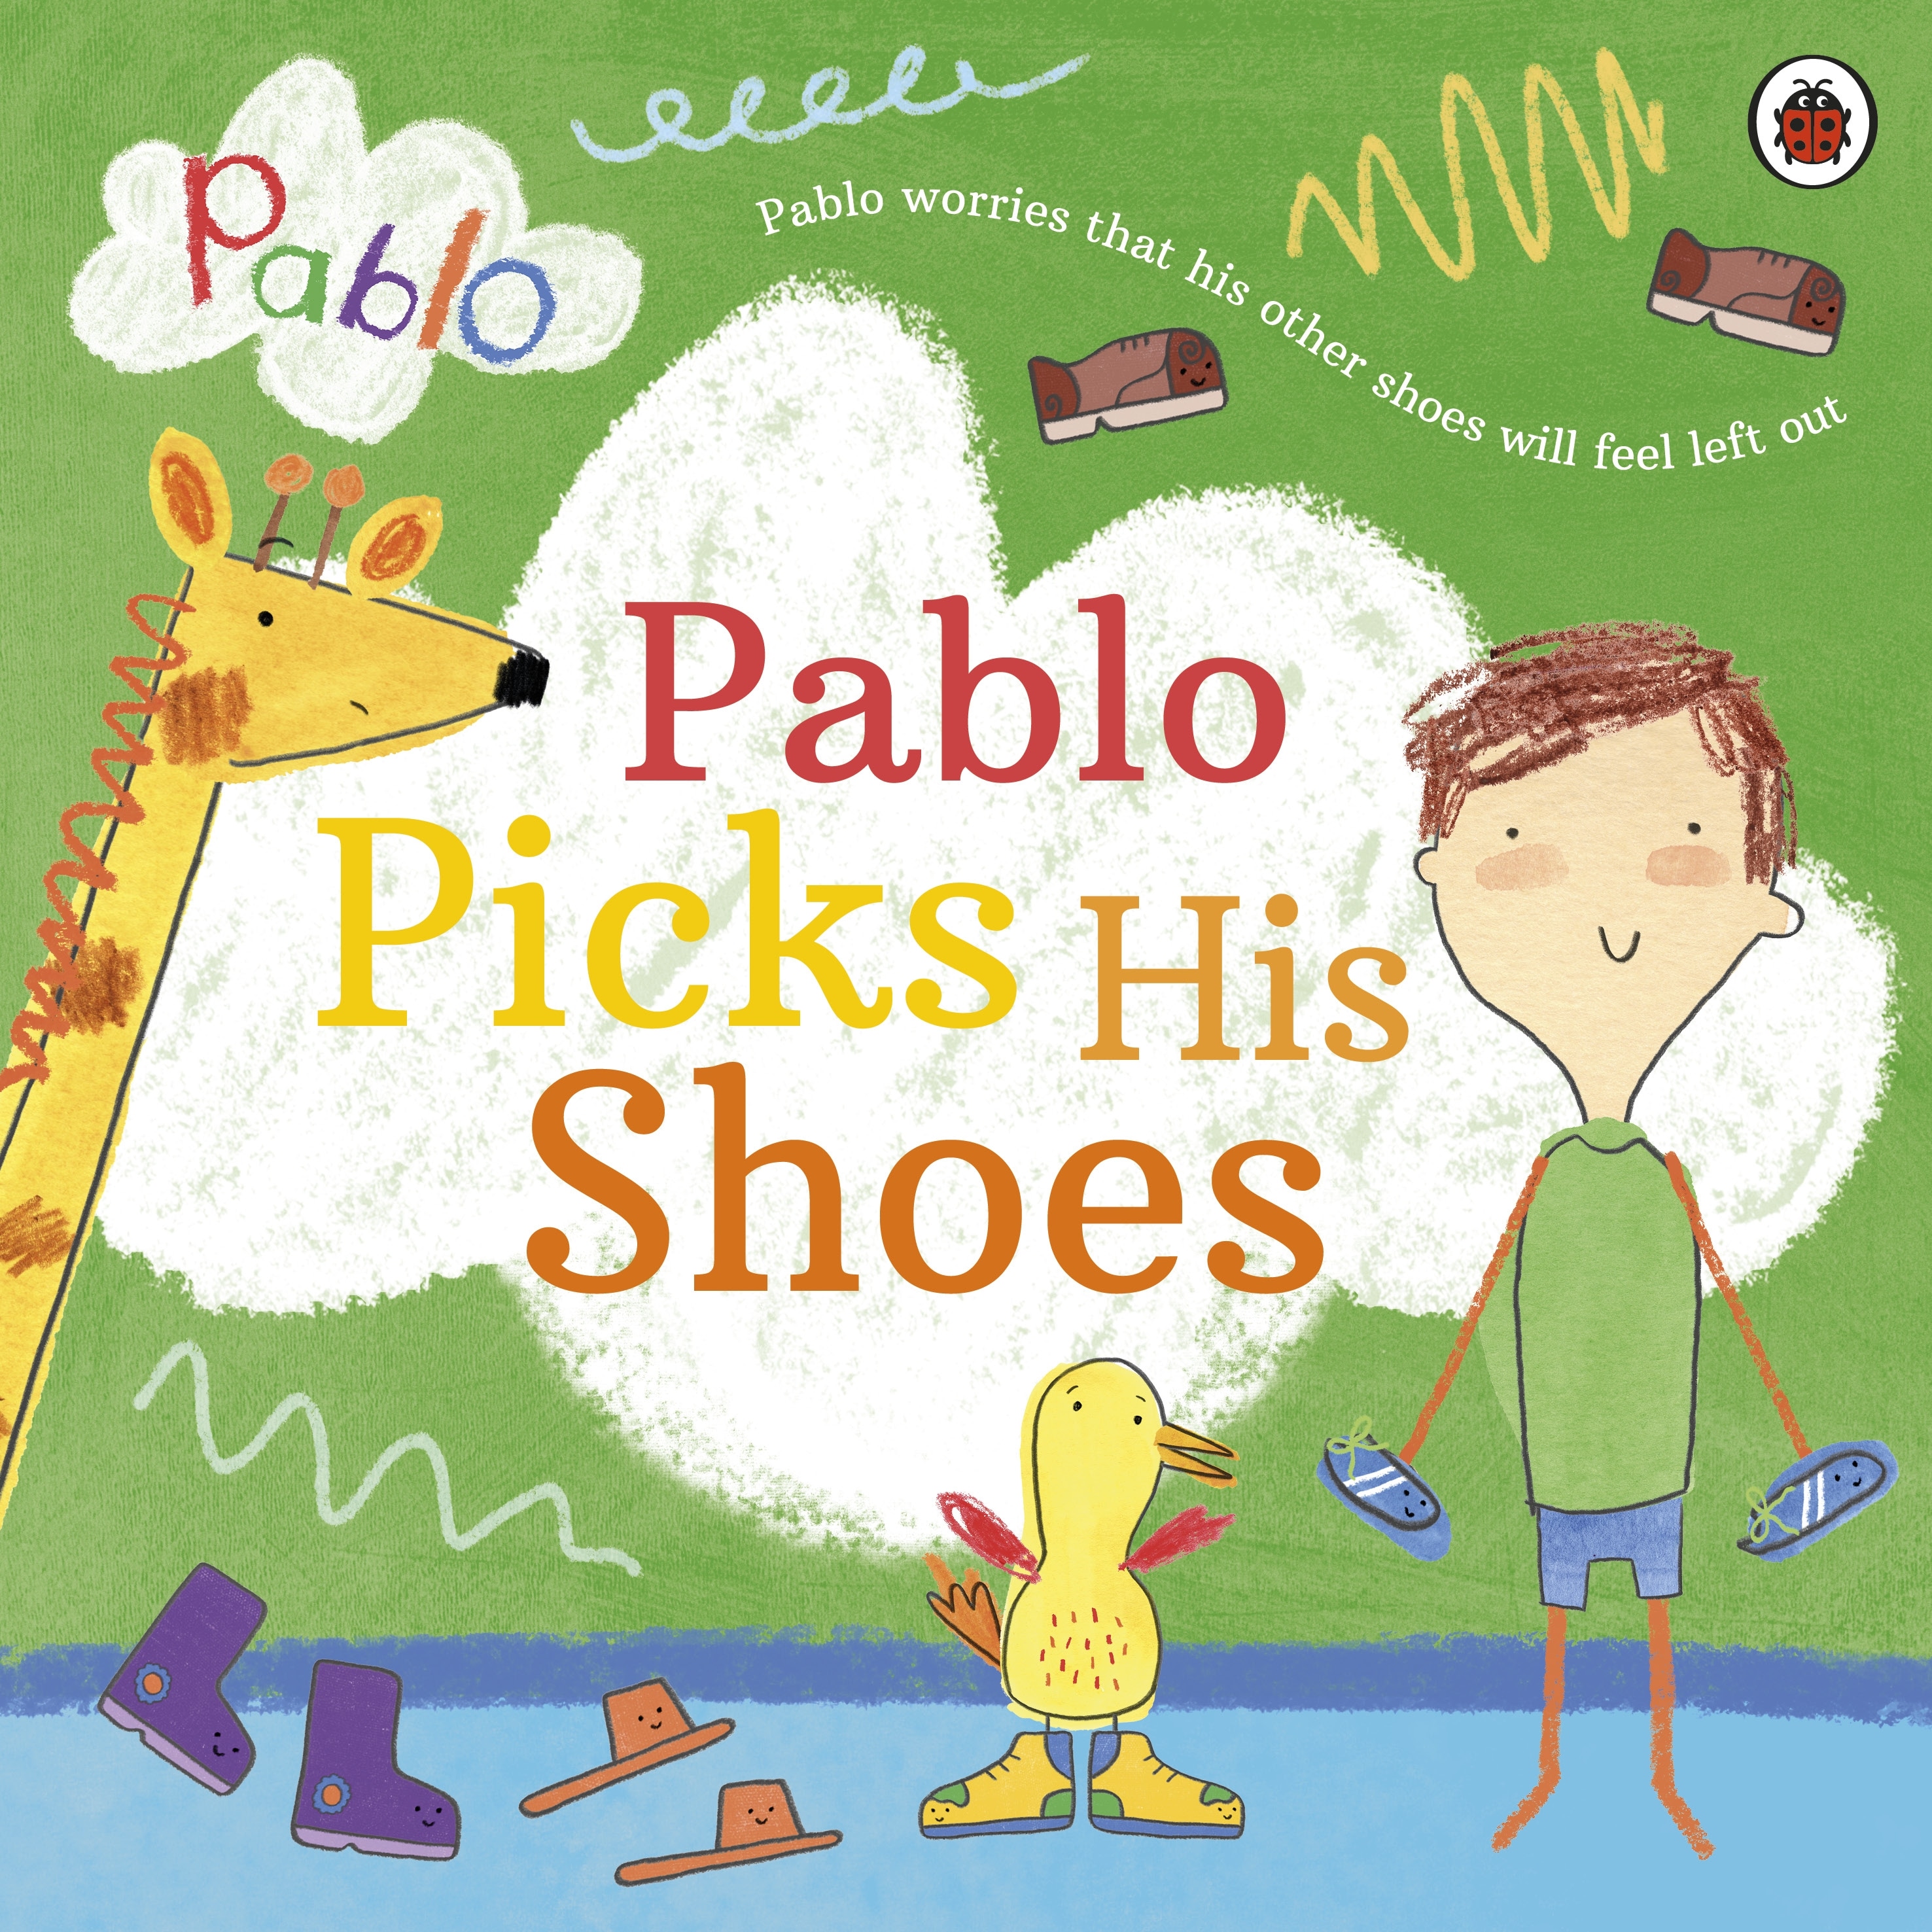 Book “Pablo: Pablo Picks His Shoes” by Pablo — August 6, 2020